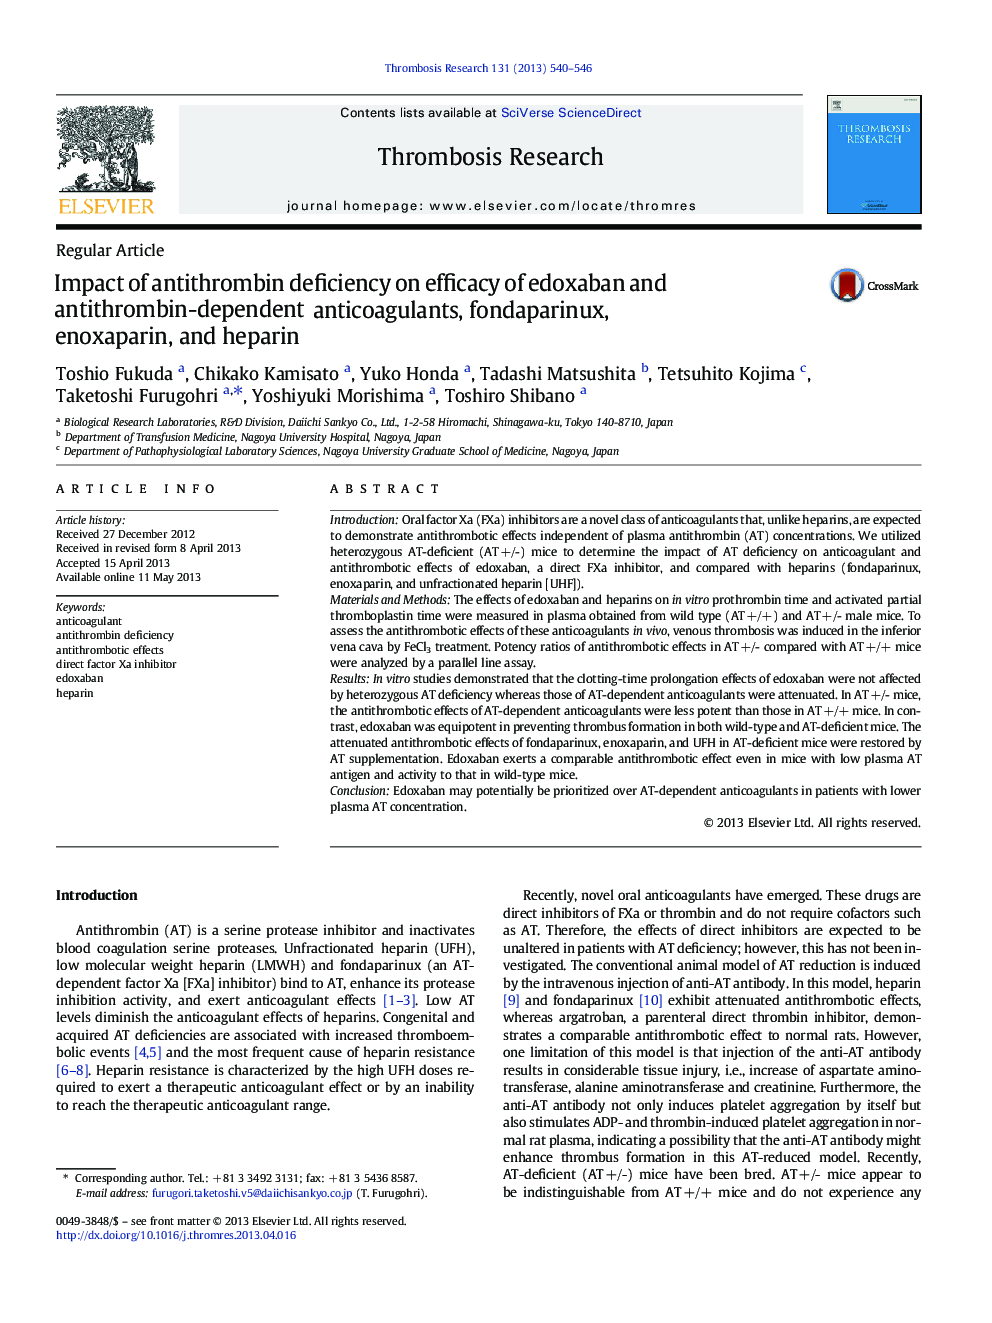 Impact of antithrombin deficiency on efficacy of edoxaban and antithrombin-dependent anticoagulants, fondaparinux, enoxaparin, and heparin